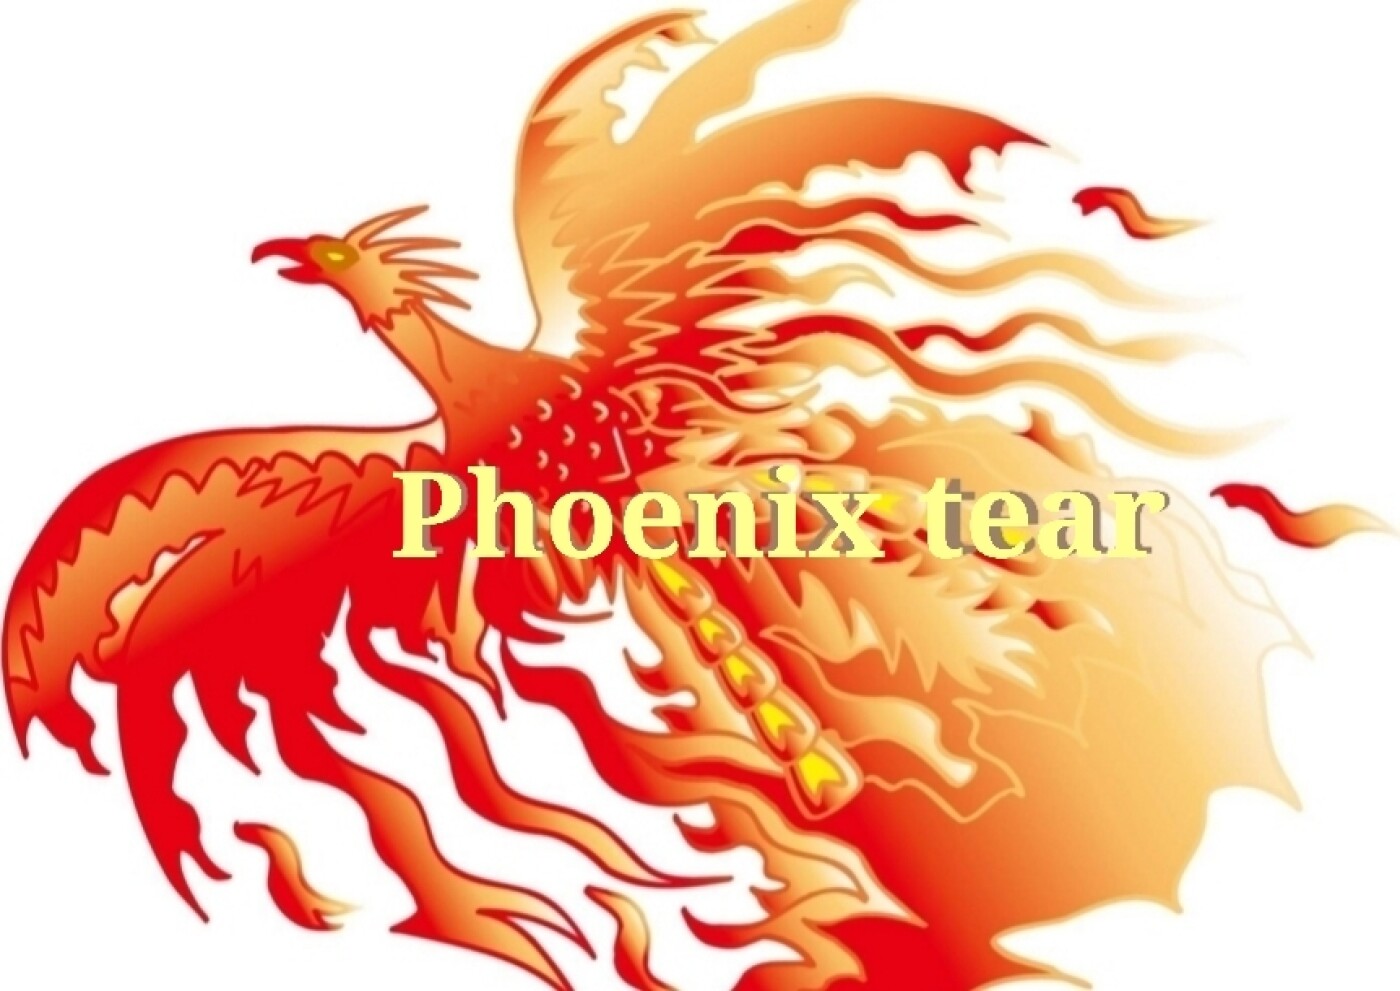 Phoenix tear